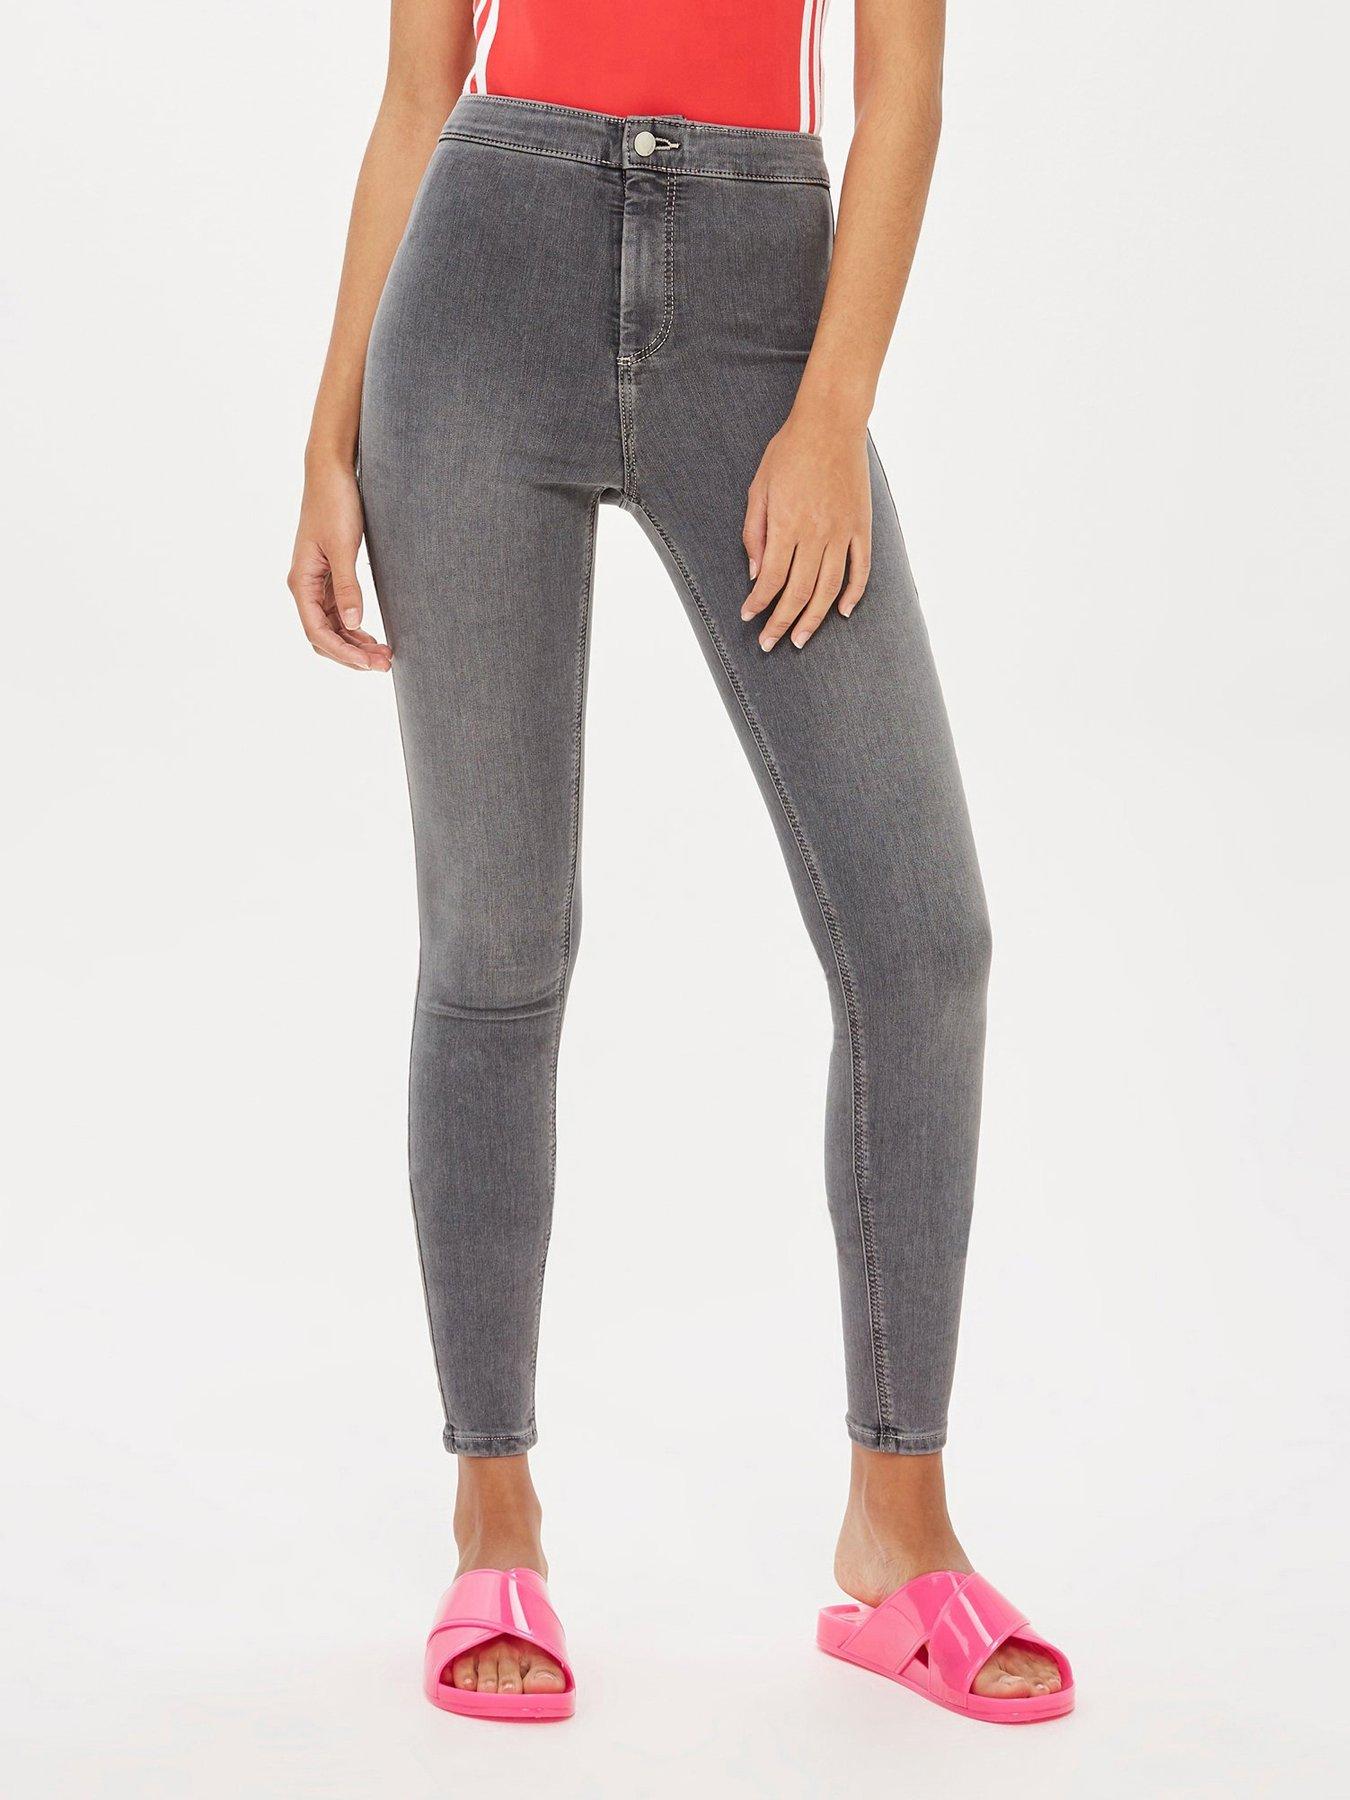 topshop grey joni jeans